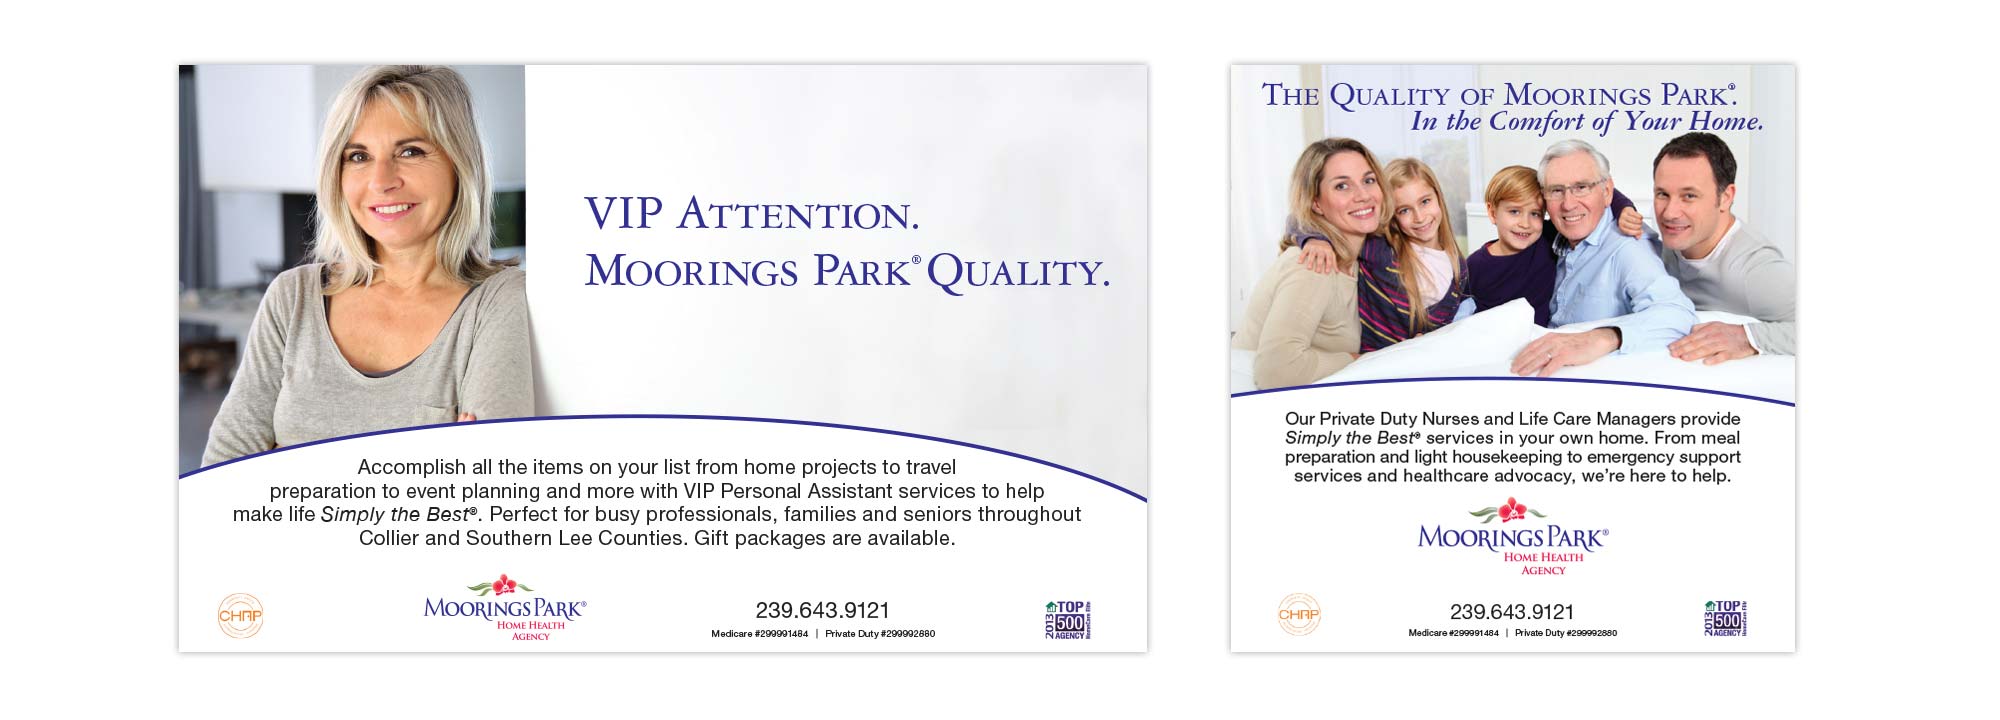 Moorings Park Home Health Agency Ad